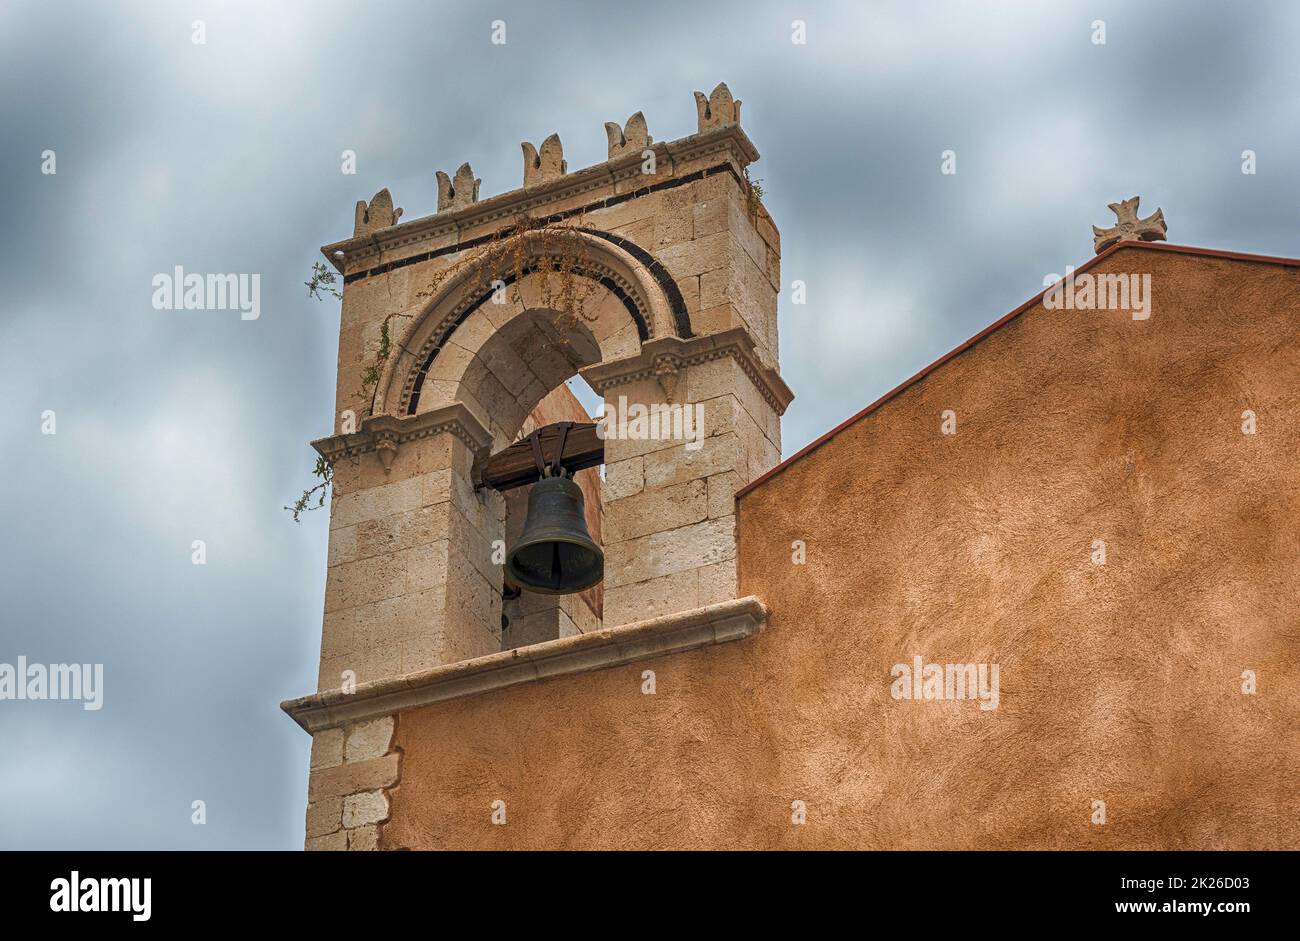 Ancient belltower, iconic landmark in Taormina, Sicily, Italy Stock Photo